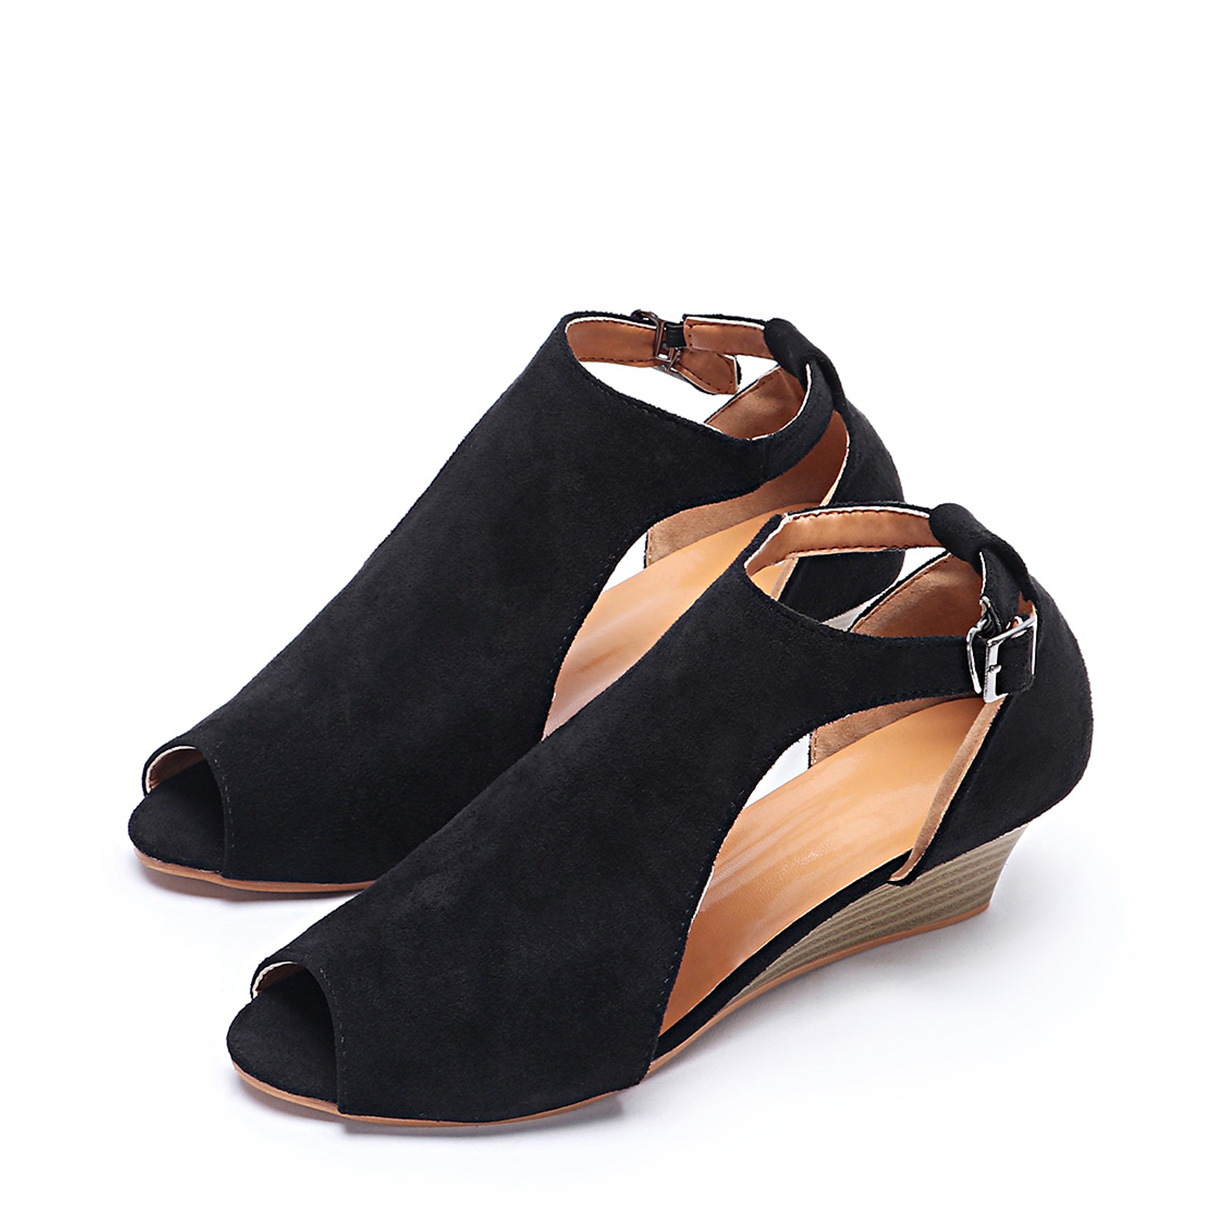 Black Peep Toe Wedge Design Sandals